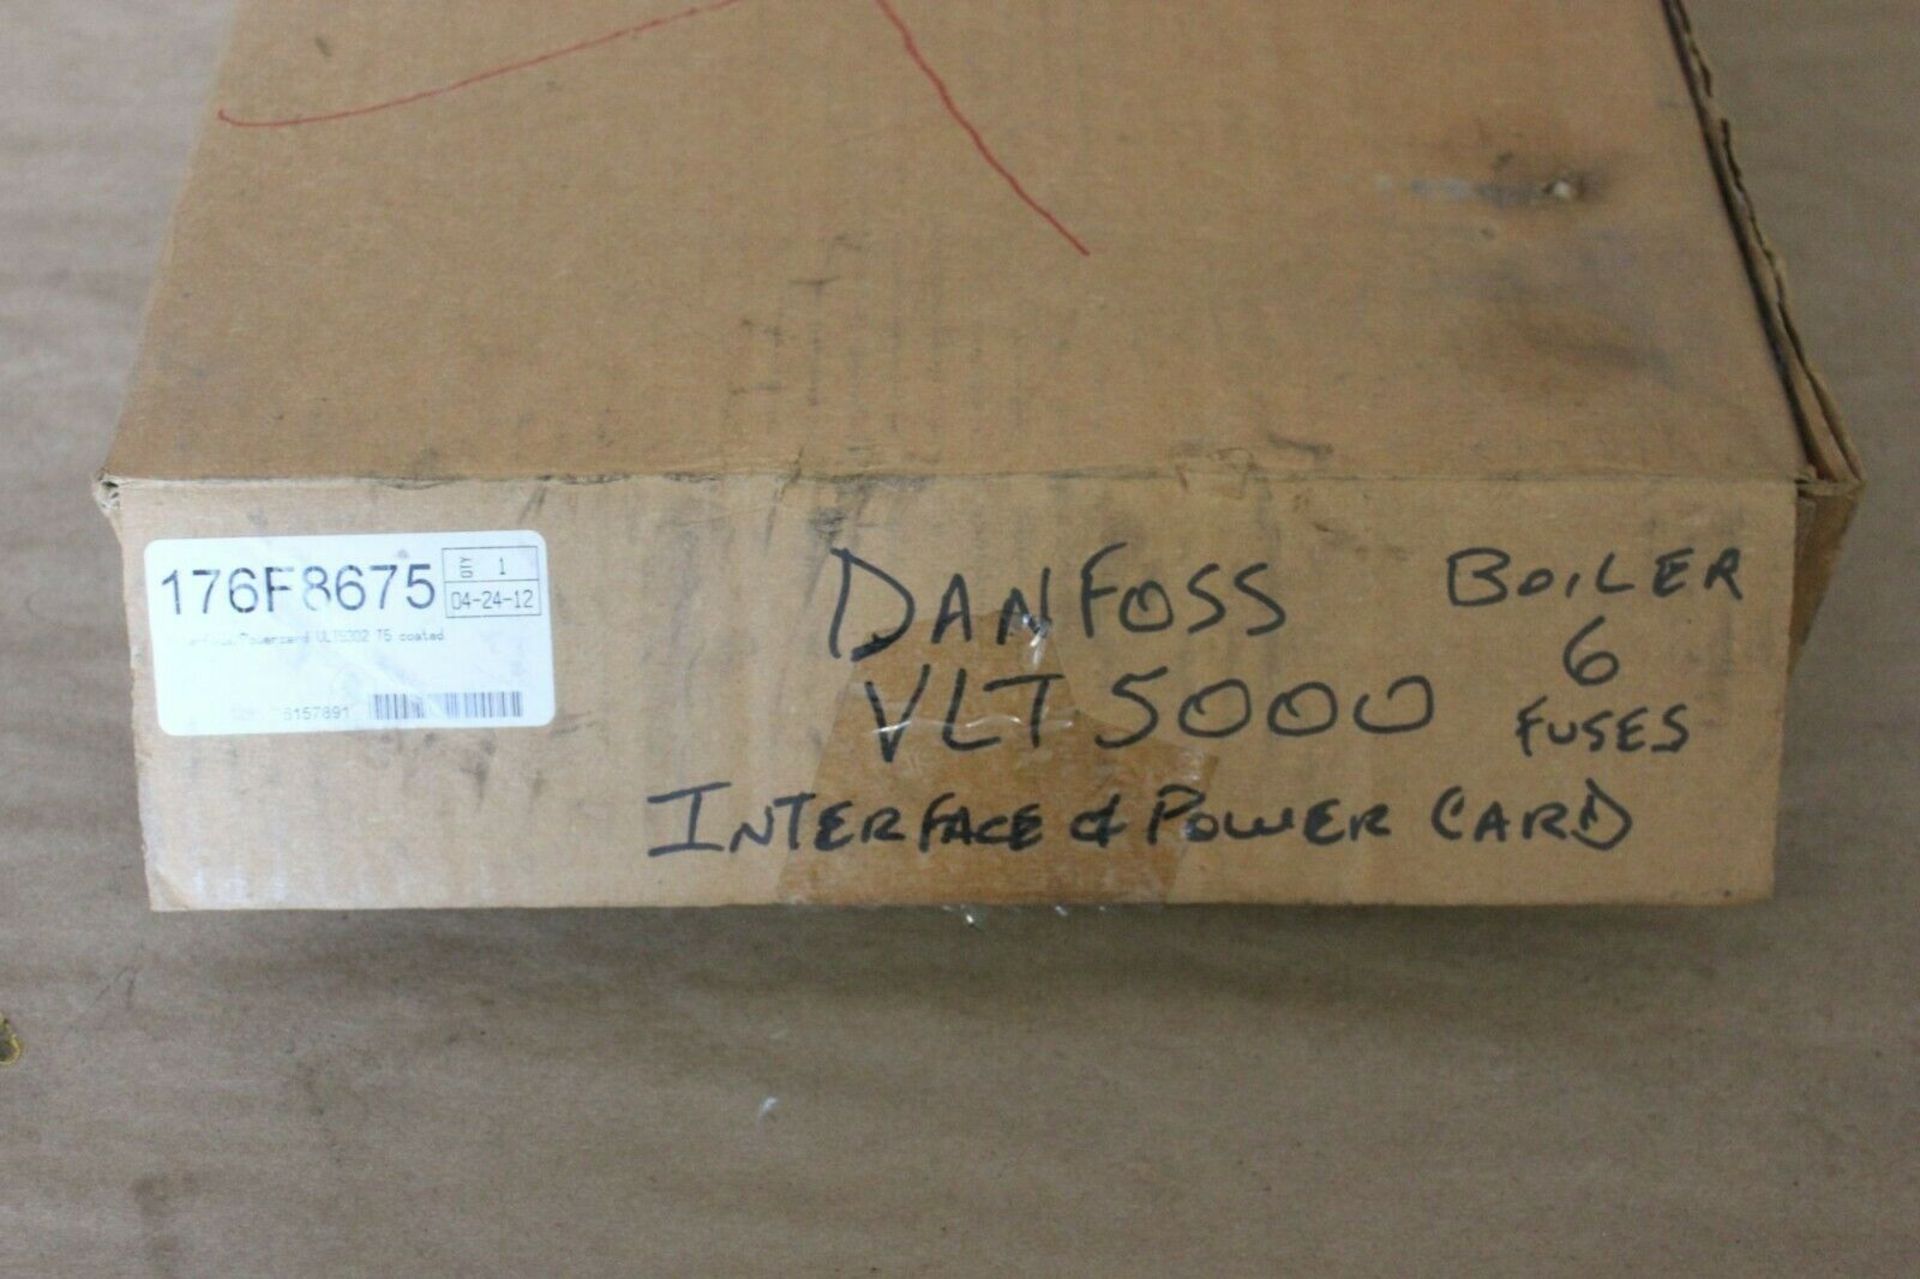 NEW DANFOSS VLT 5000 AC DRIVE INTERFACE & POWER BOARDS - Image 2 of 11